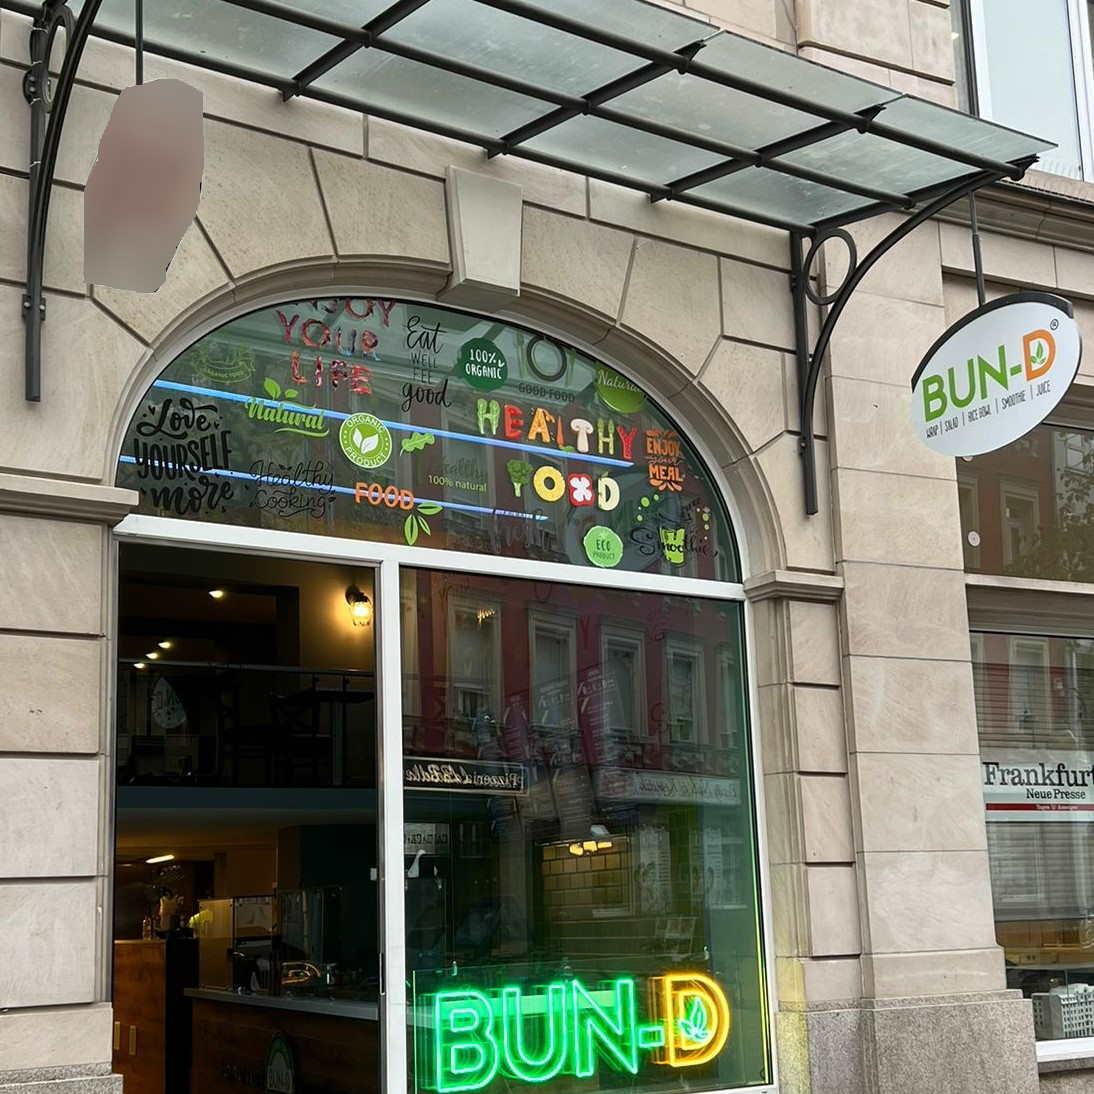 Restaurant "BUN-D" in Frankfurt am Main